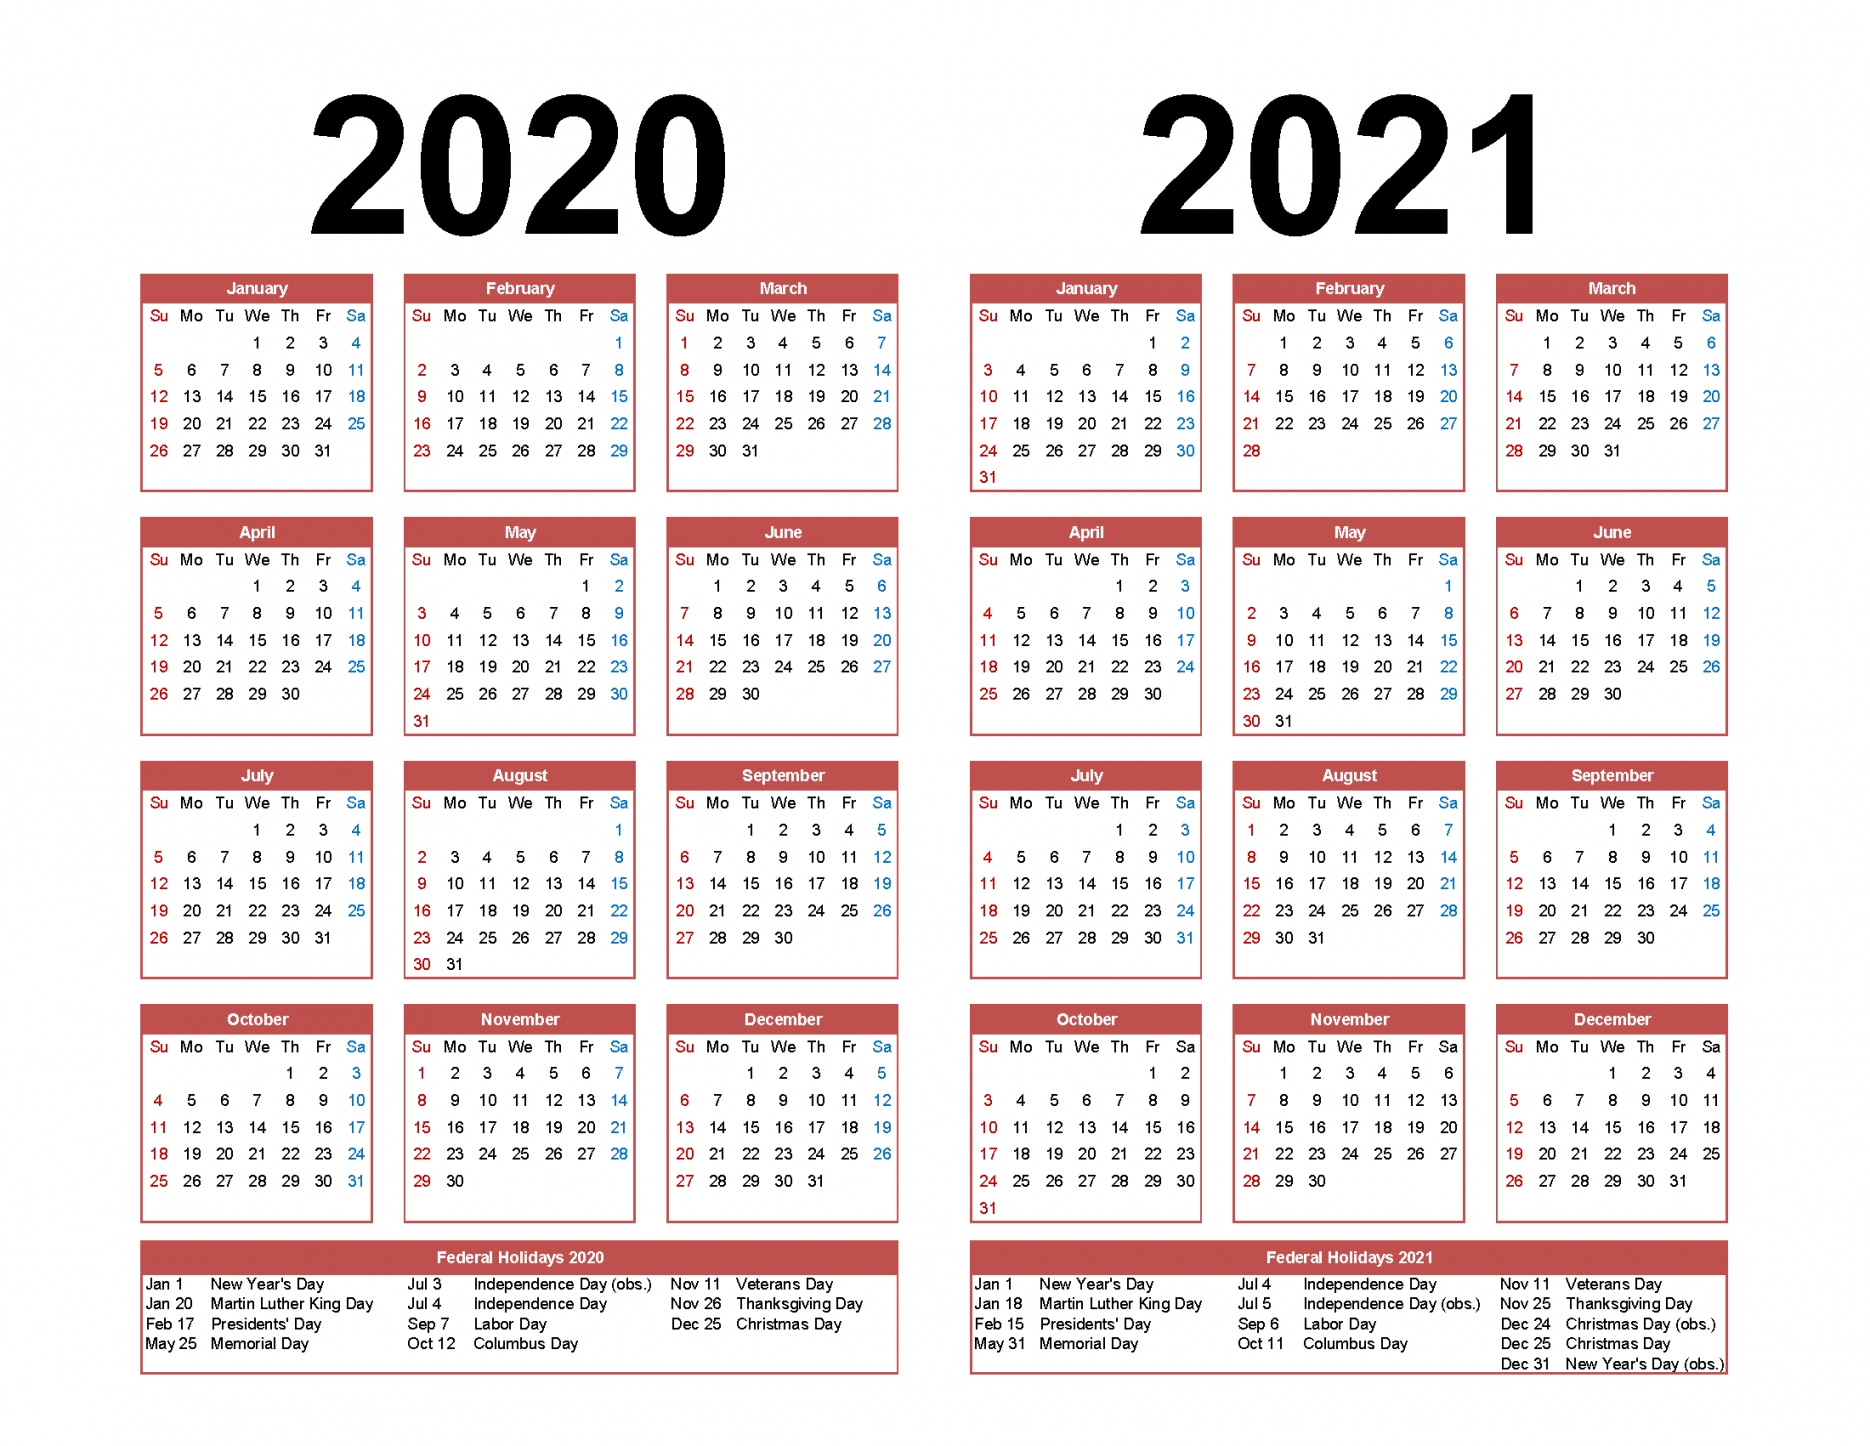 2021 Yearly Calendar Printable